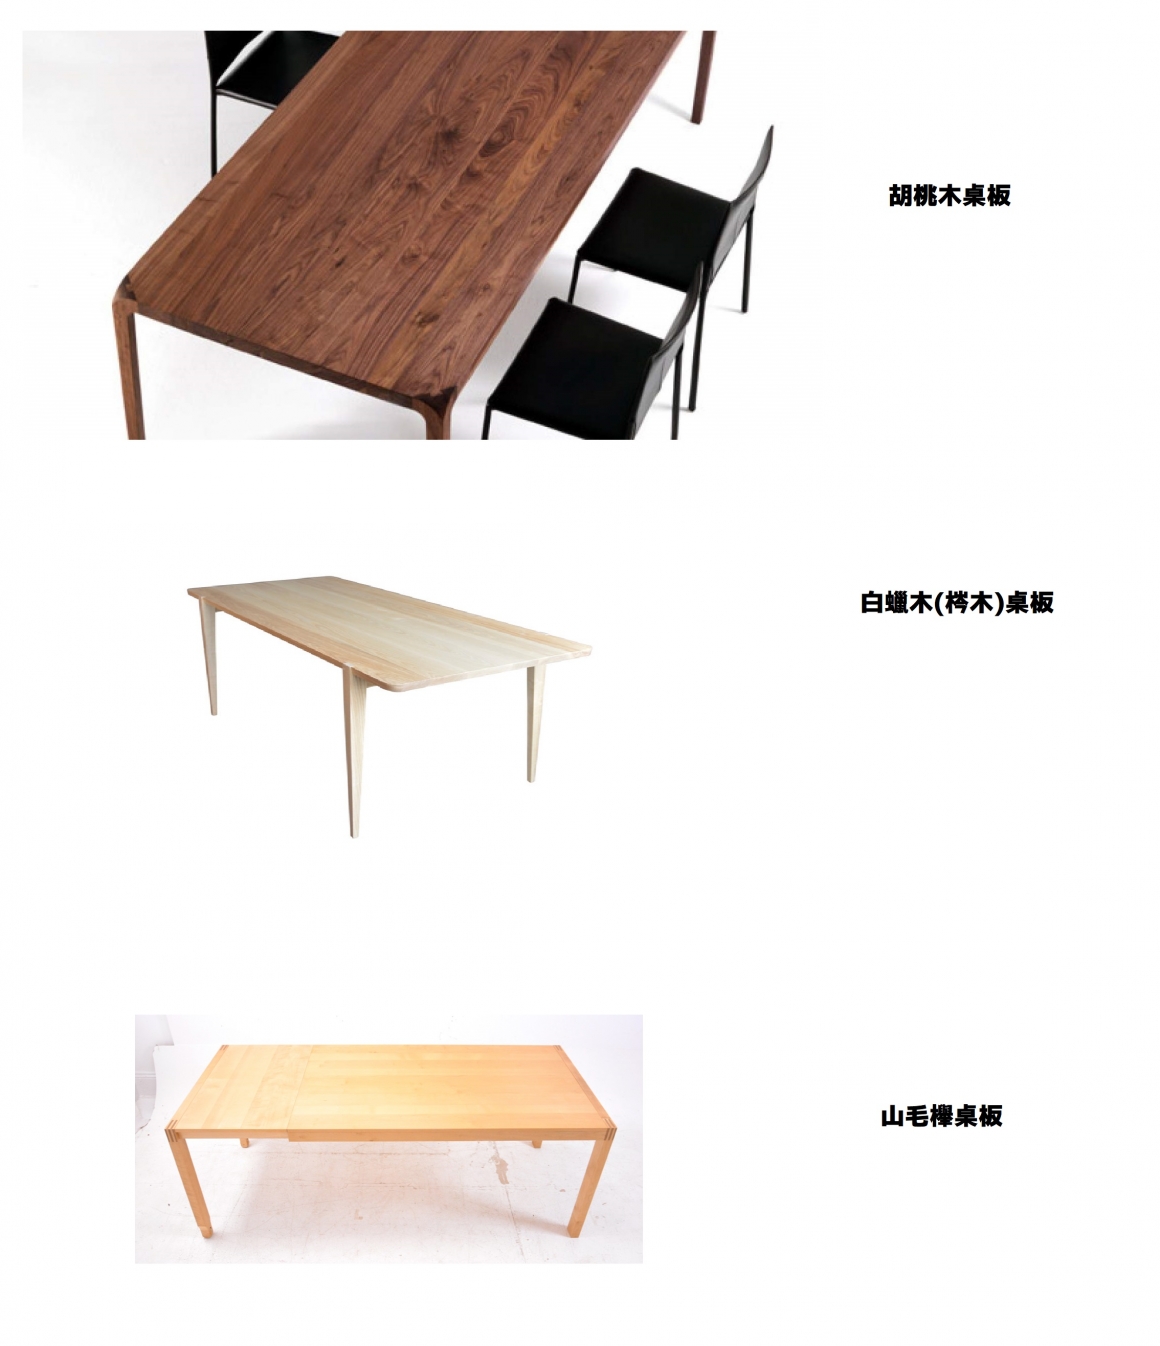 Riva1920_Sleek table (10)